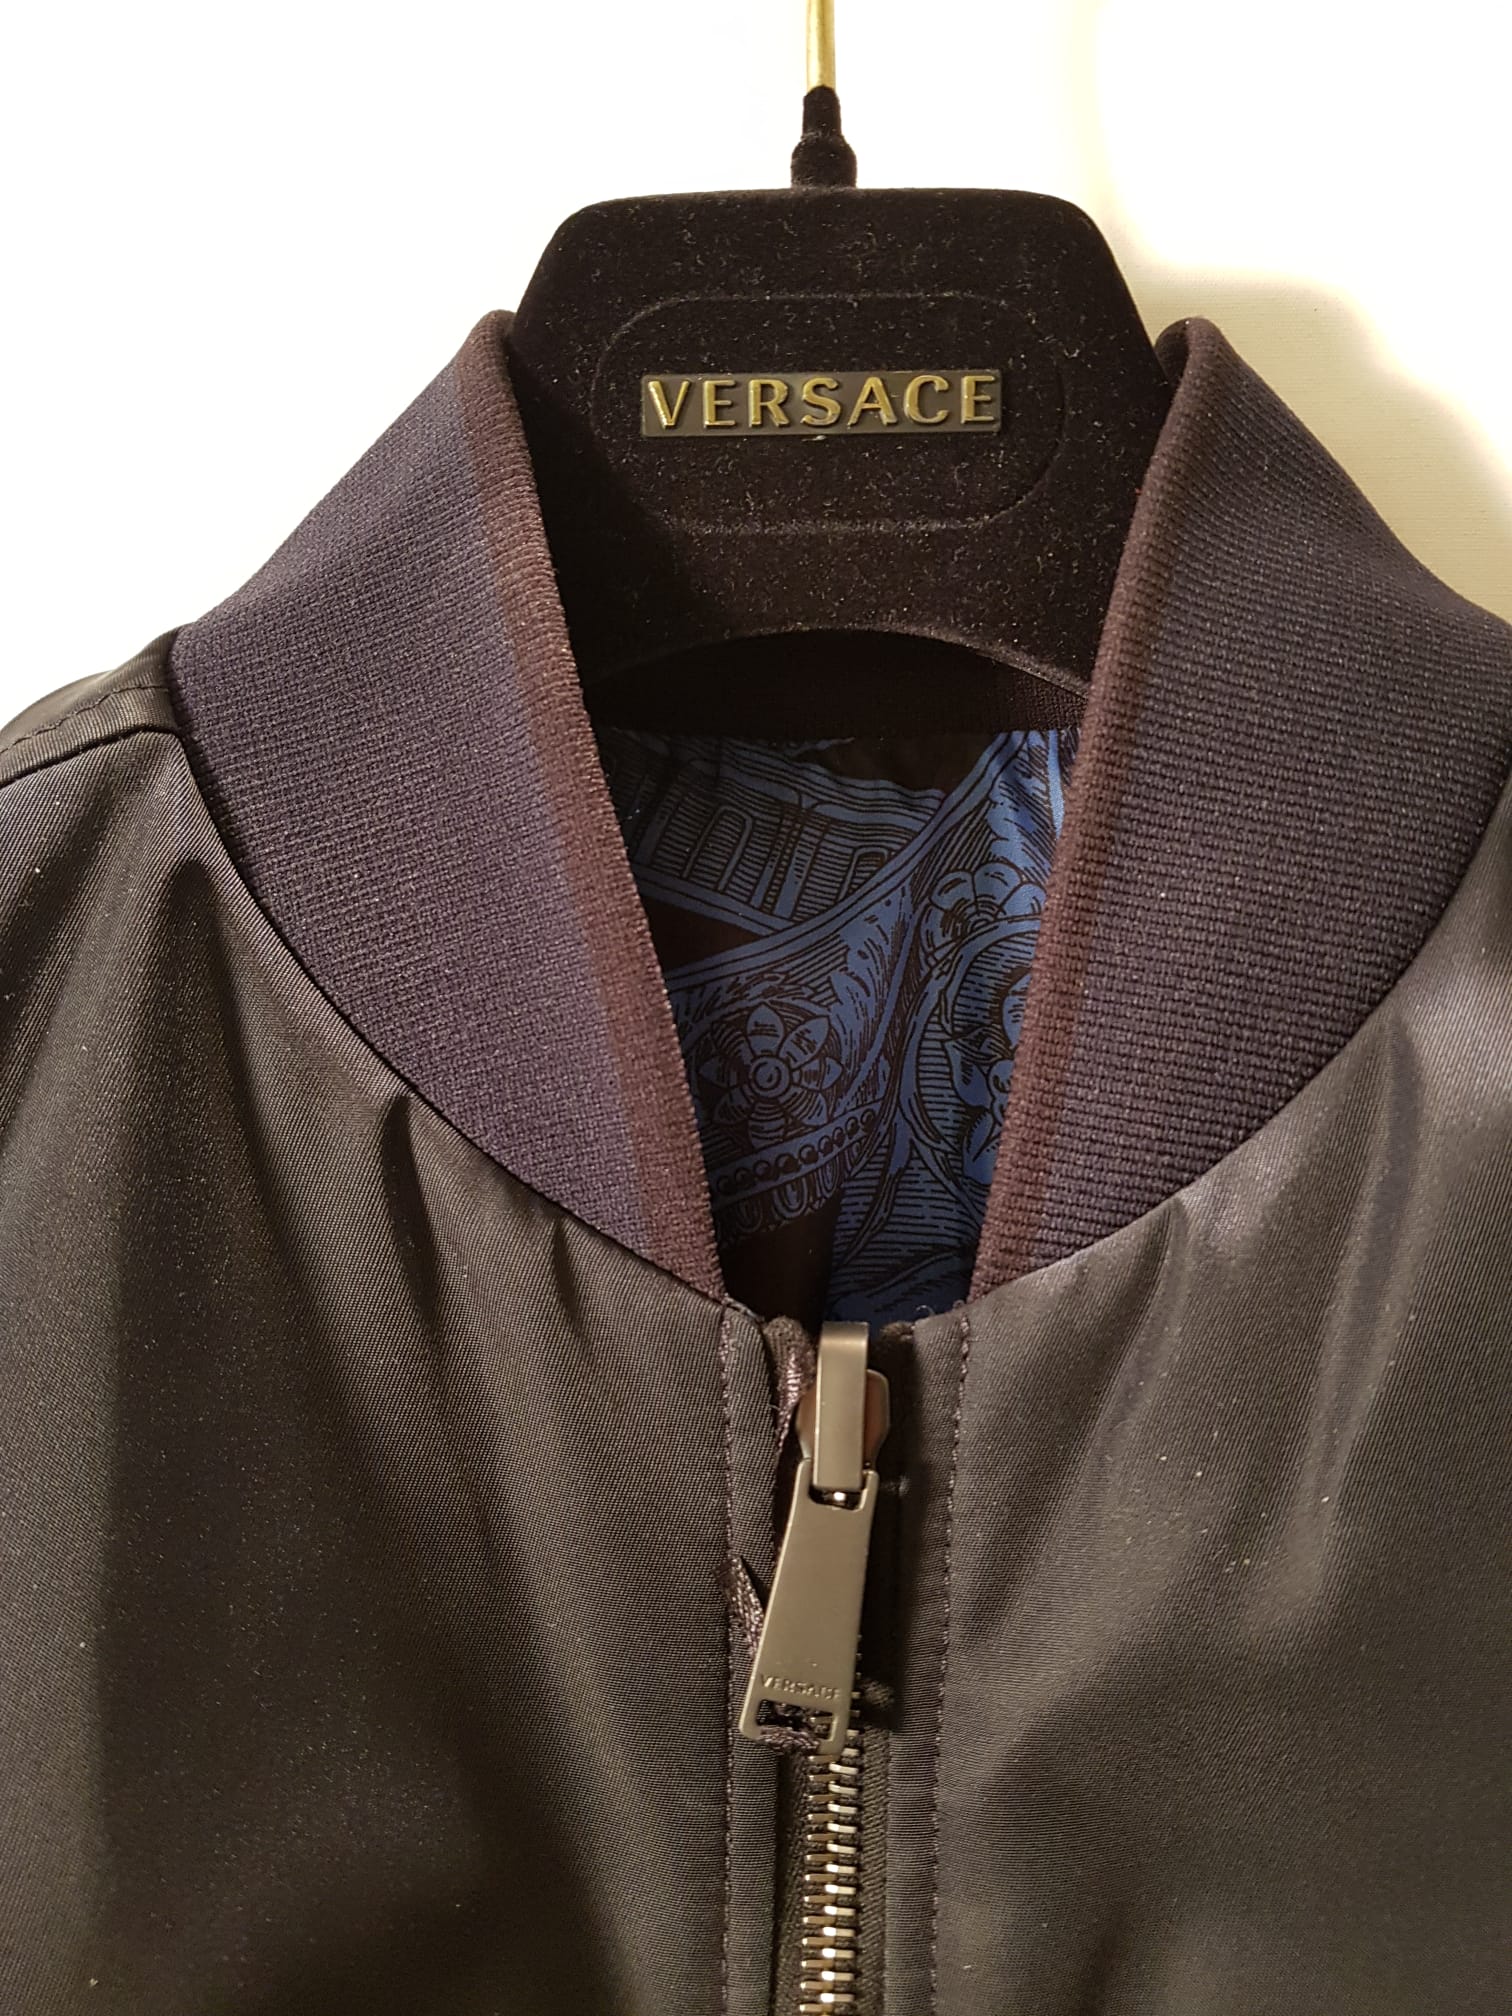 Versace - Bomberjacket reversible